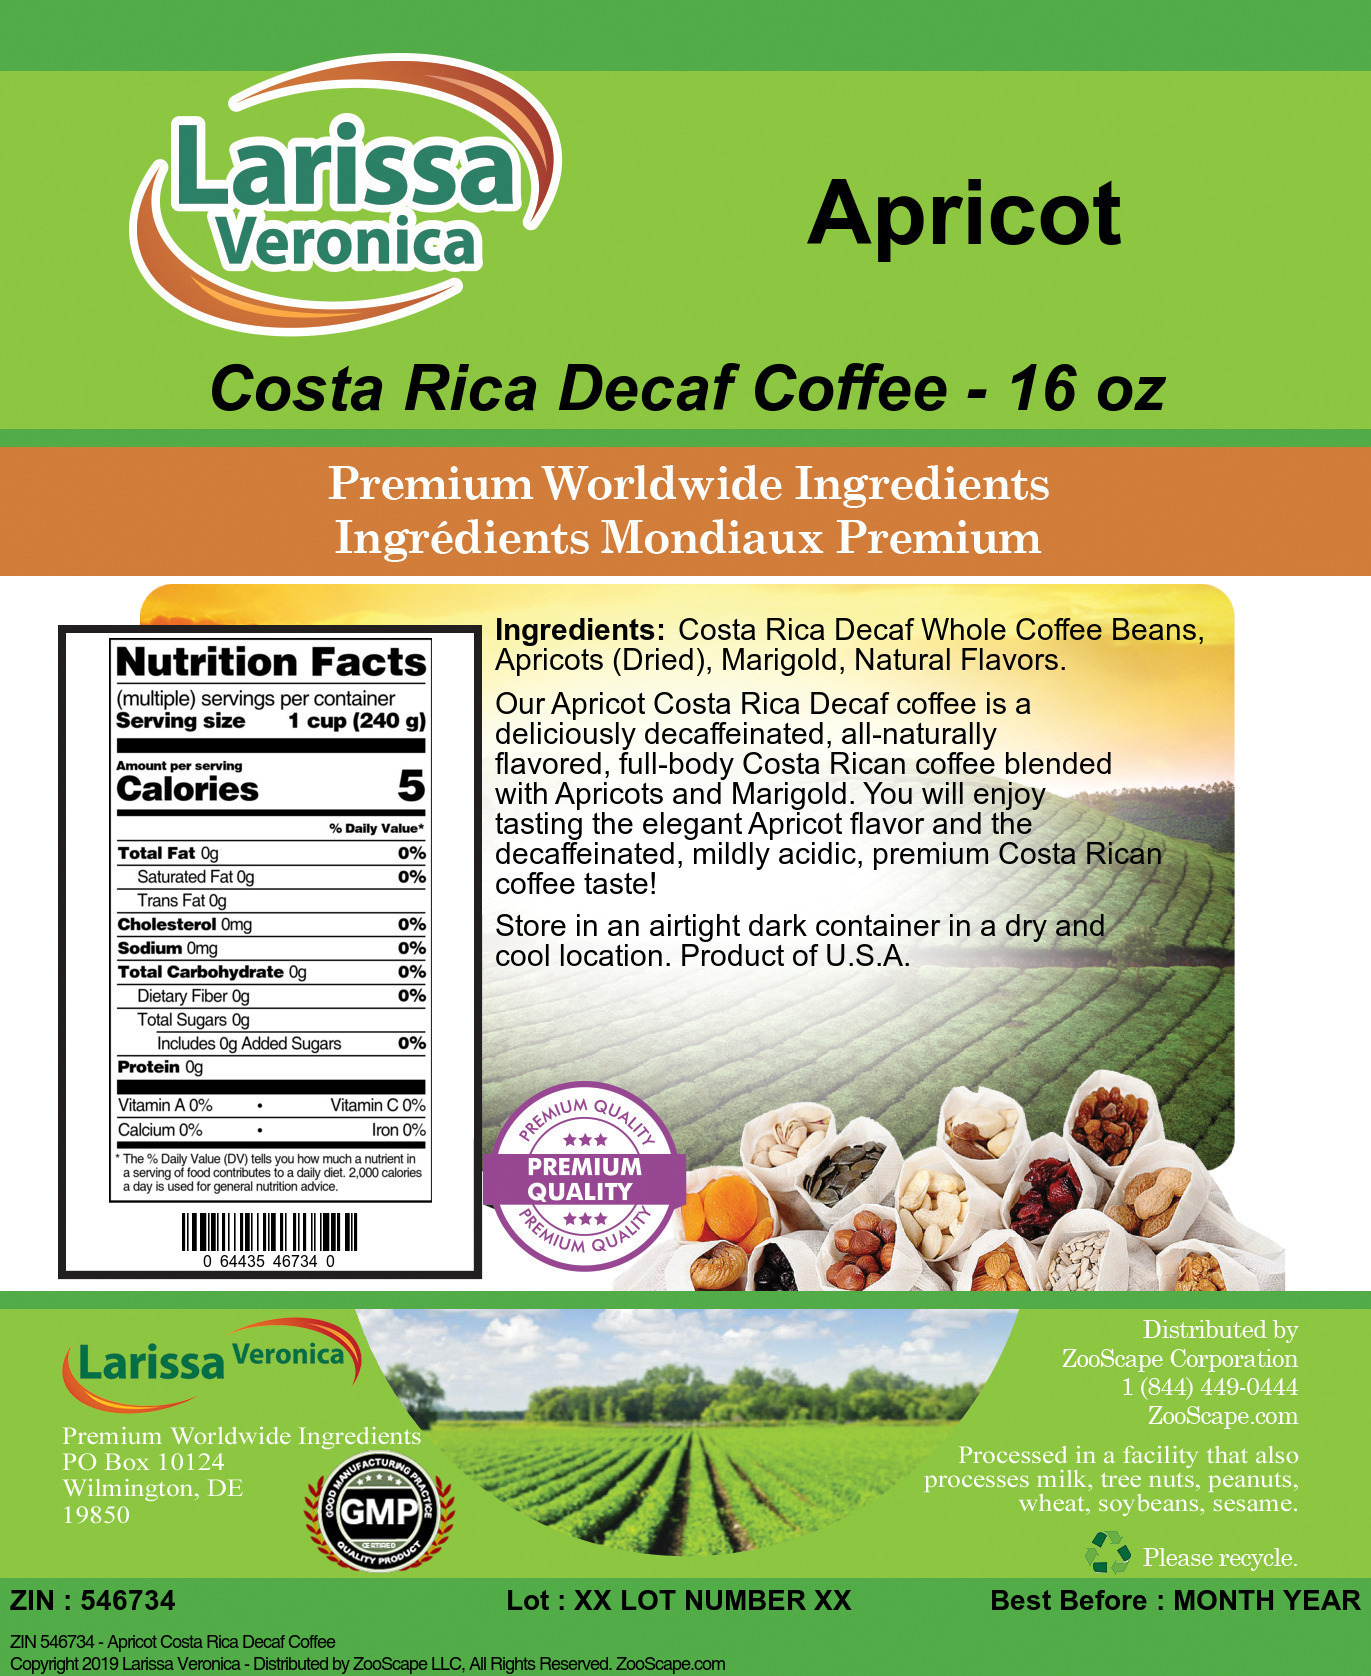 Apricot Costa Rica Decaf Coffee - Label